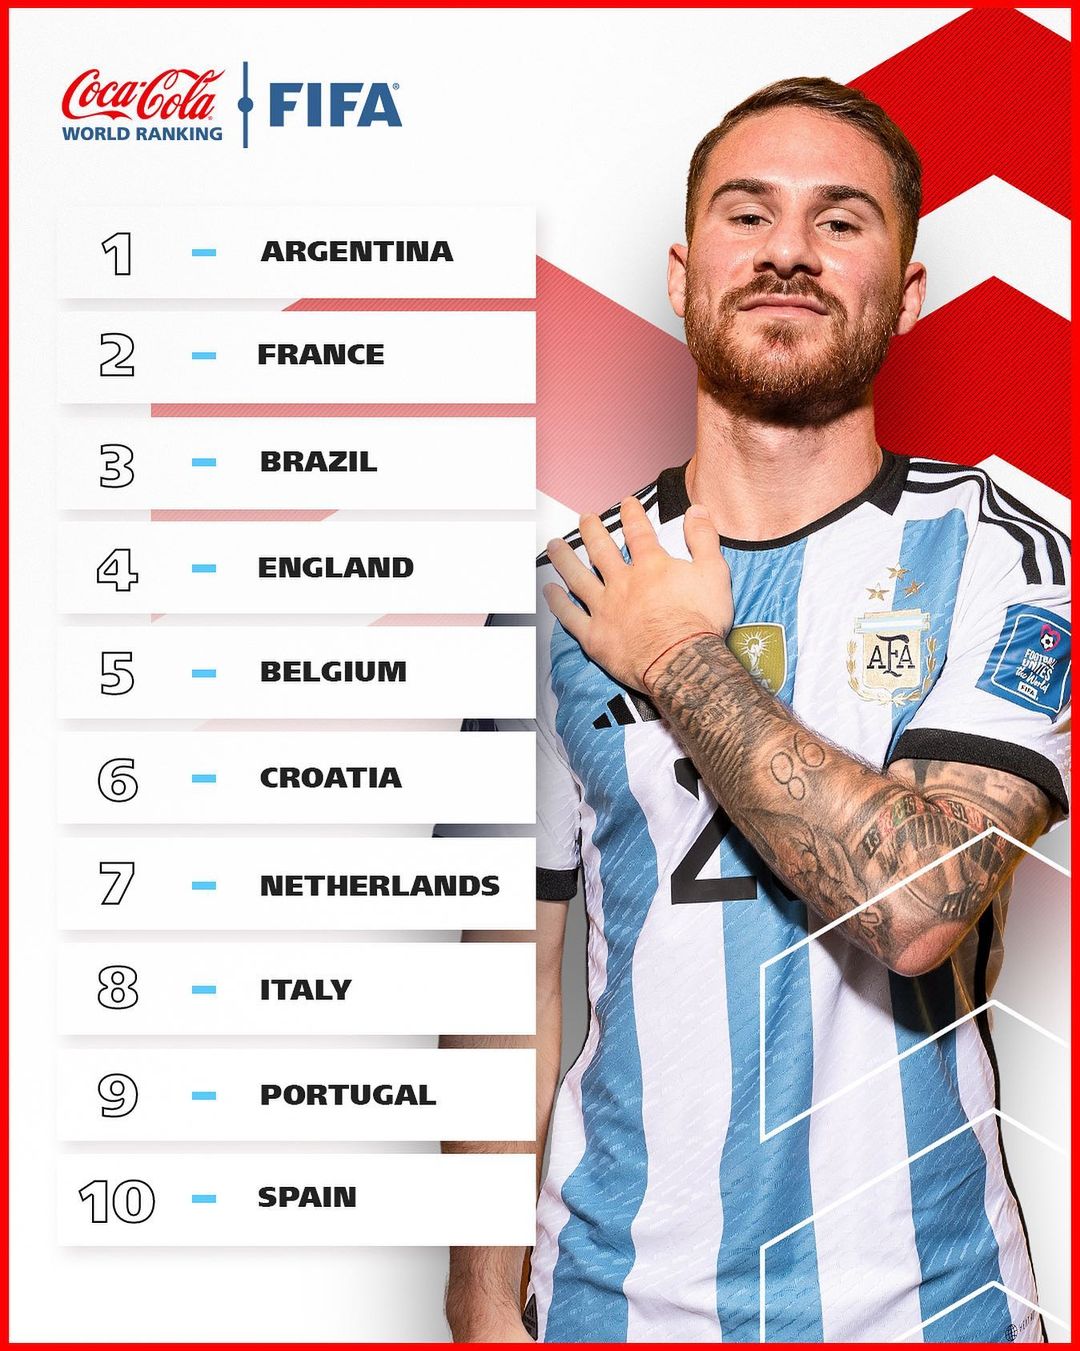 FIFA Ranking- Top 10